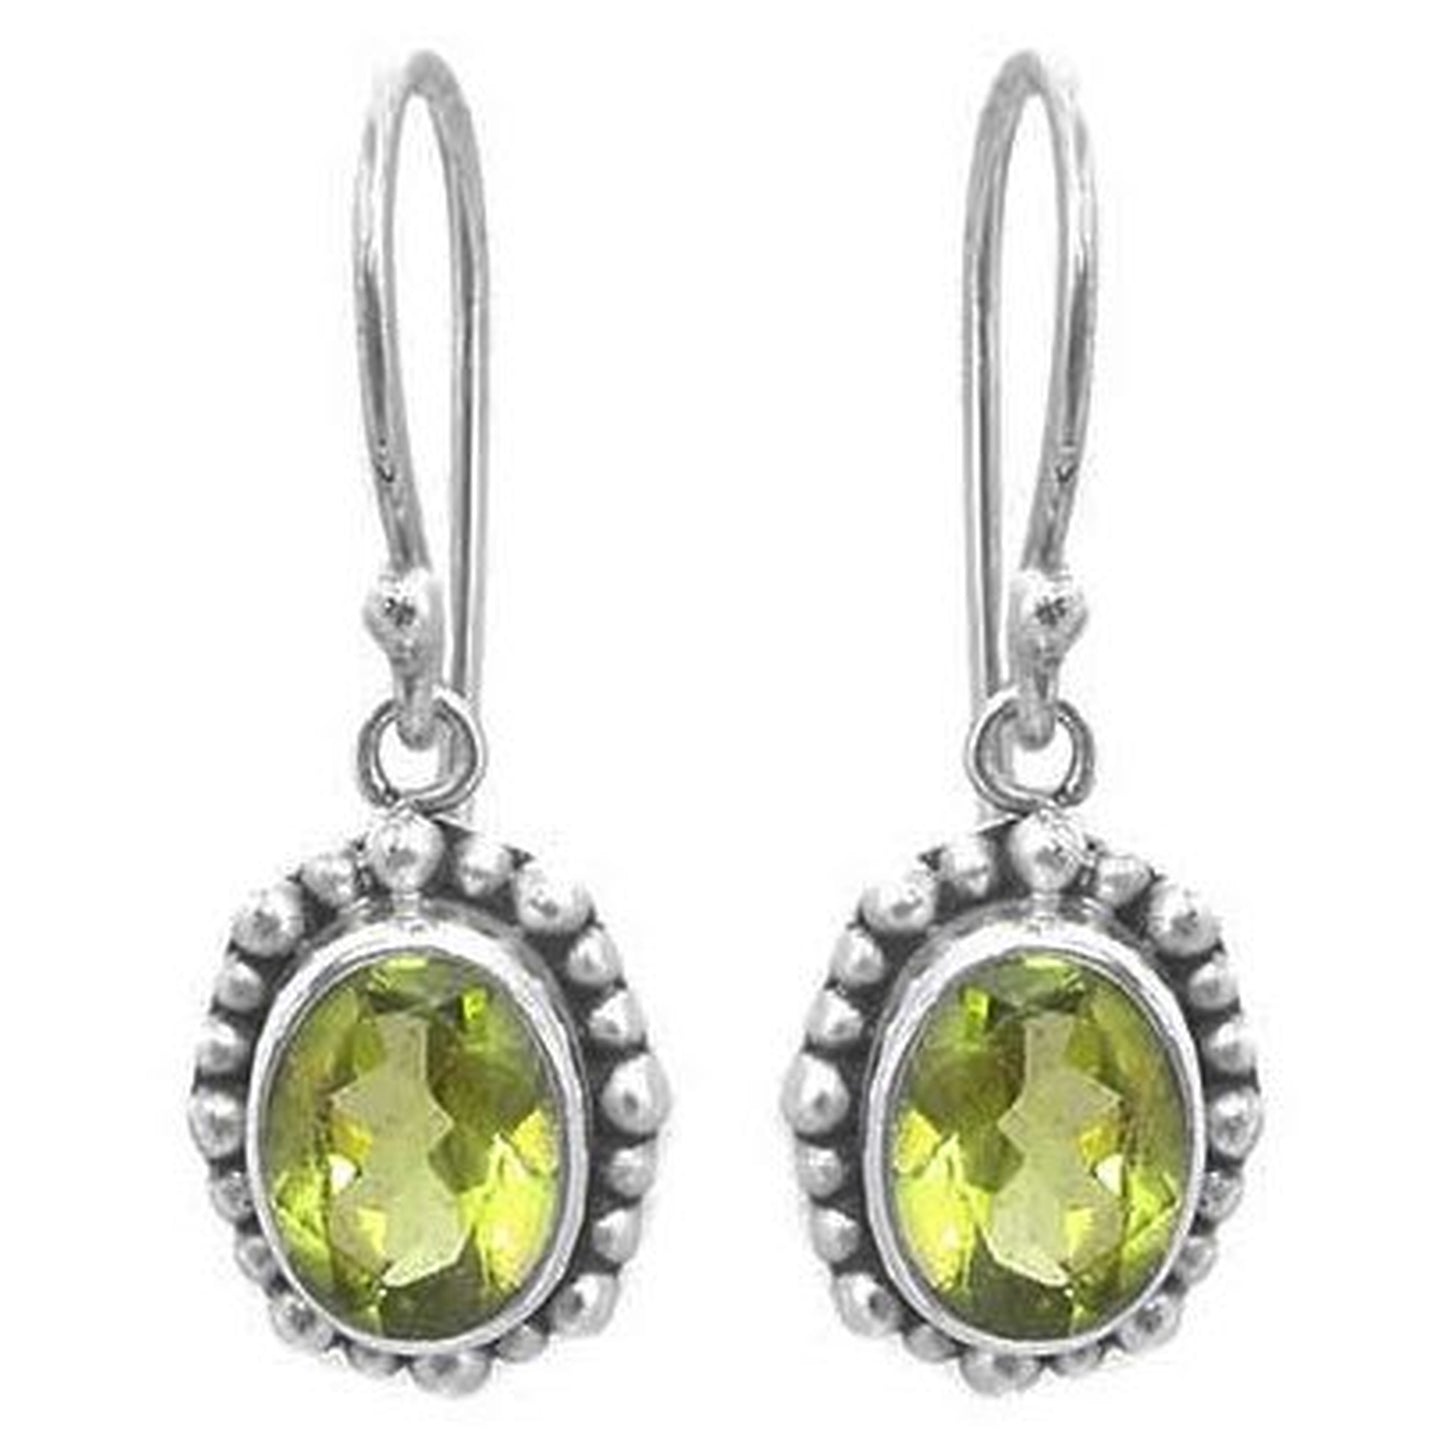 Silver earrings with oval peridot gemstones.